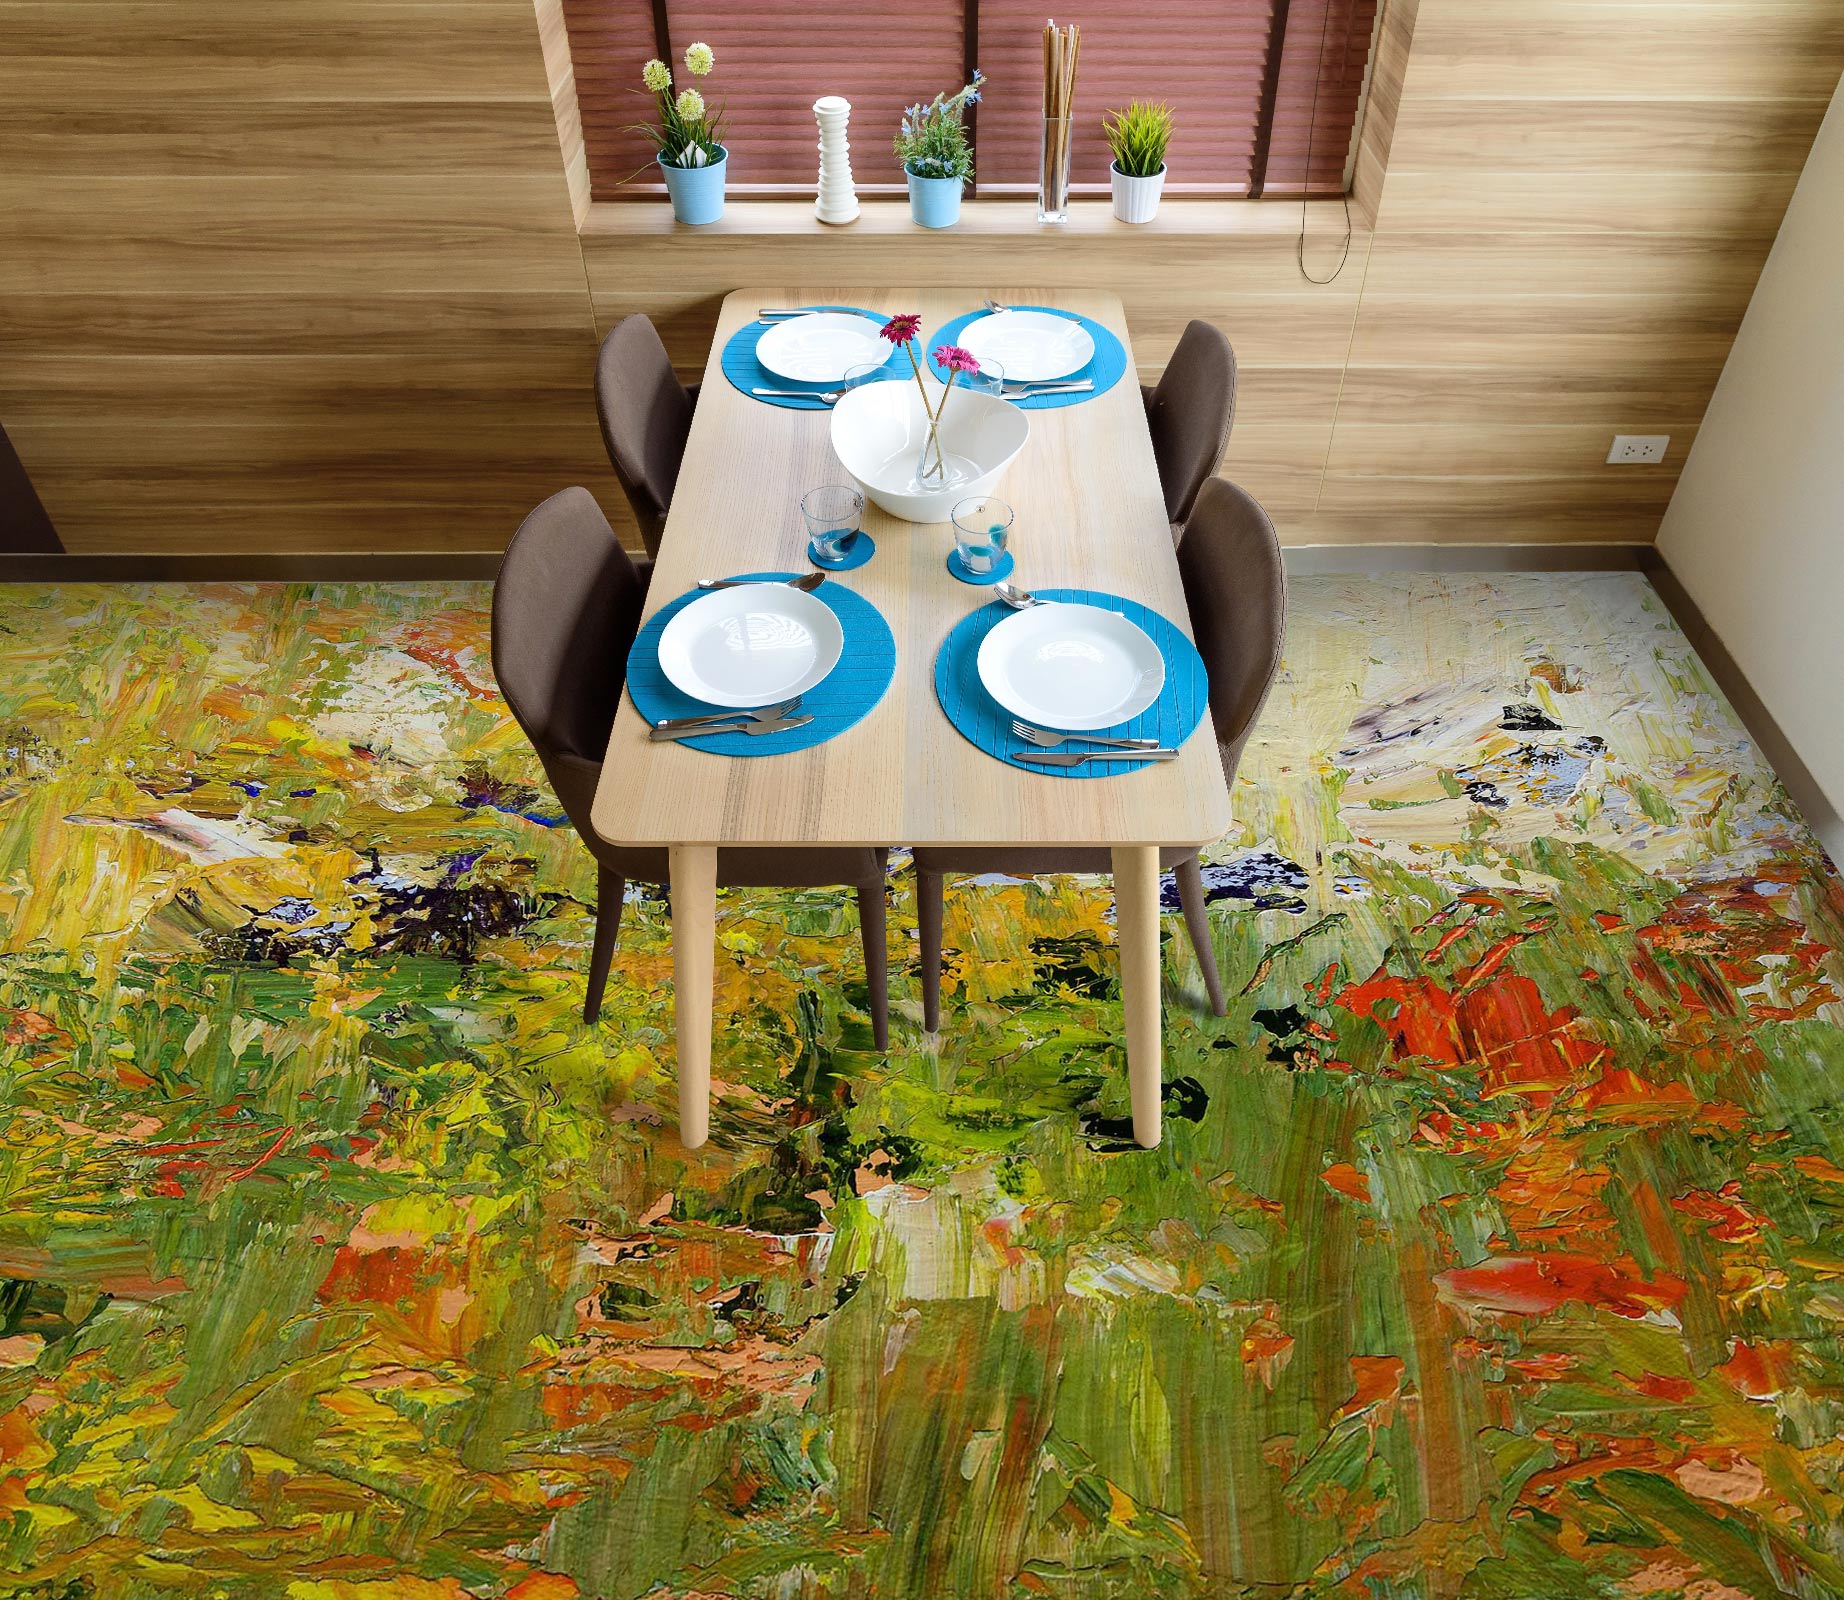 3D Grass Oil Painting 9652 Allan P. Friedlander Floor Mural